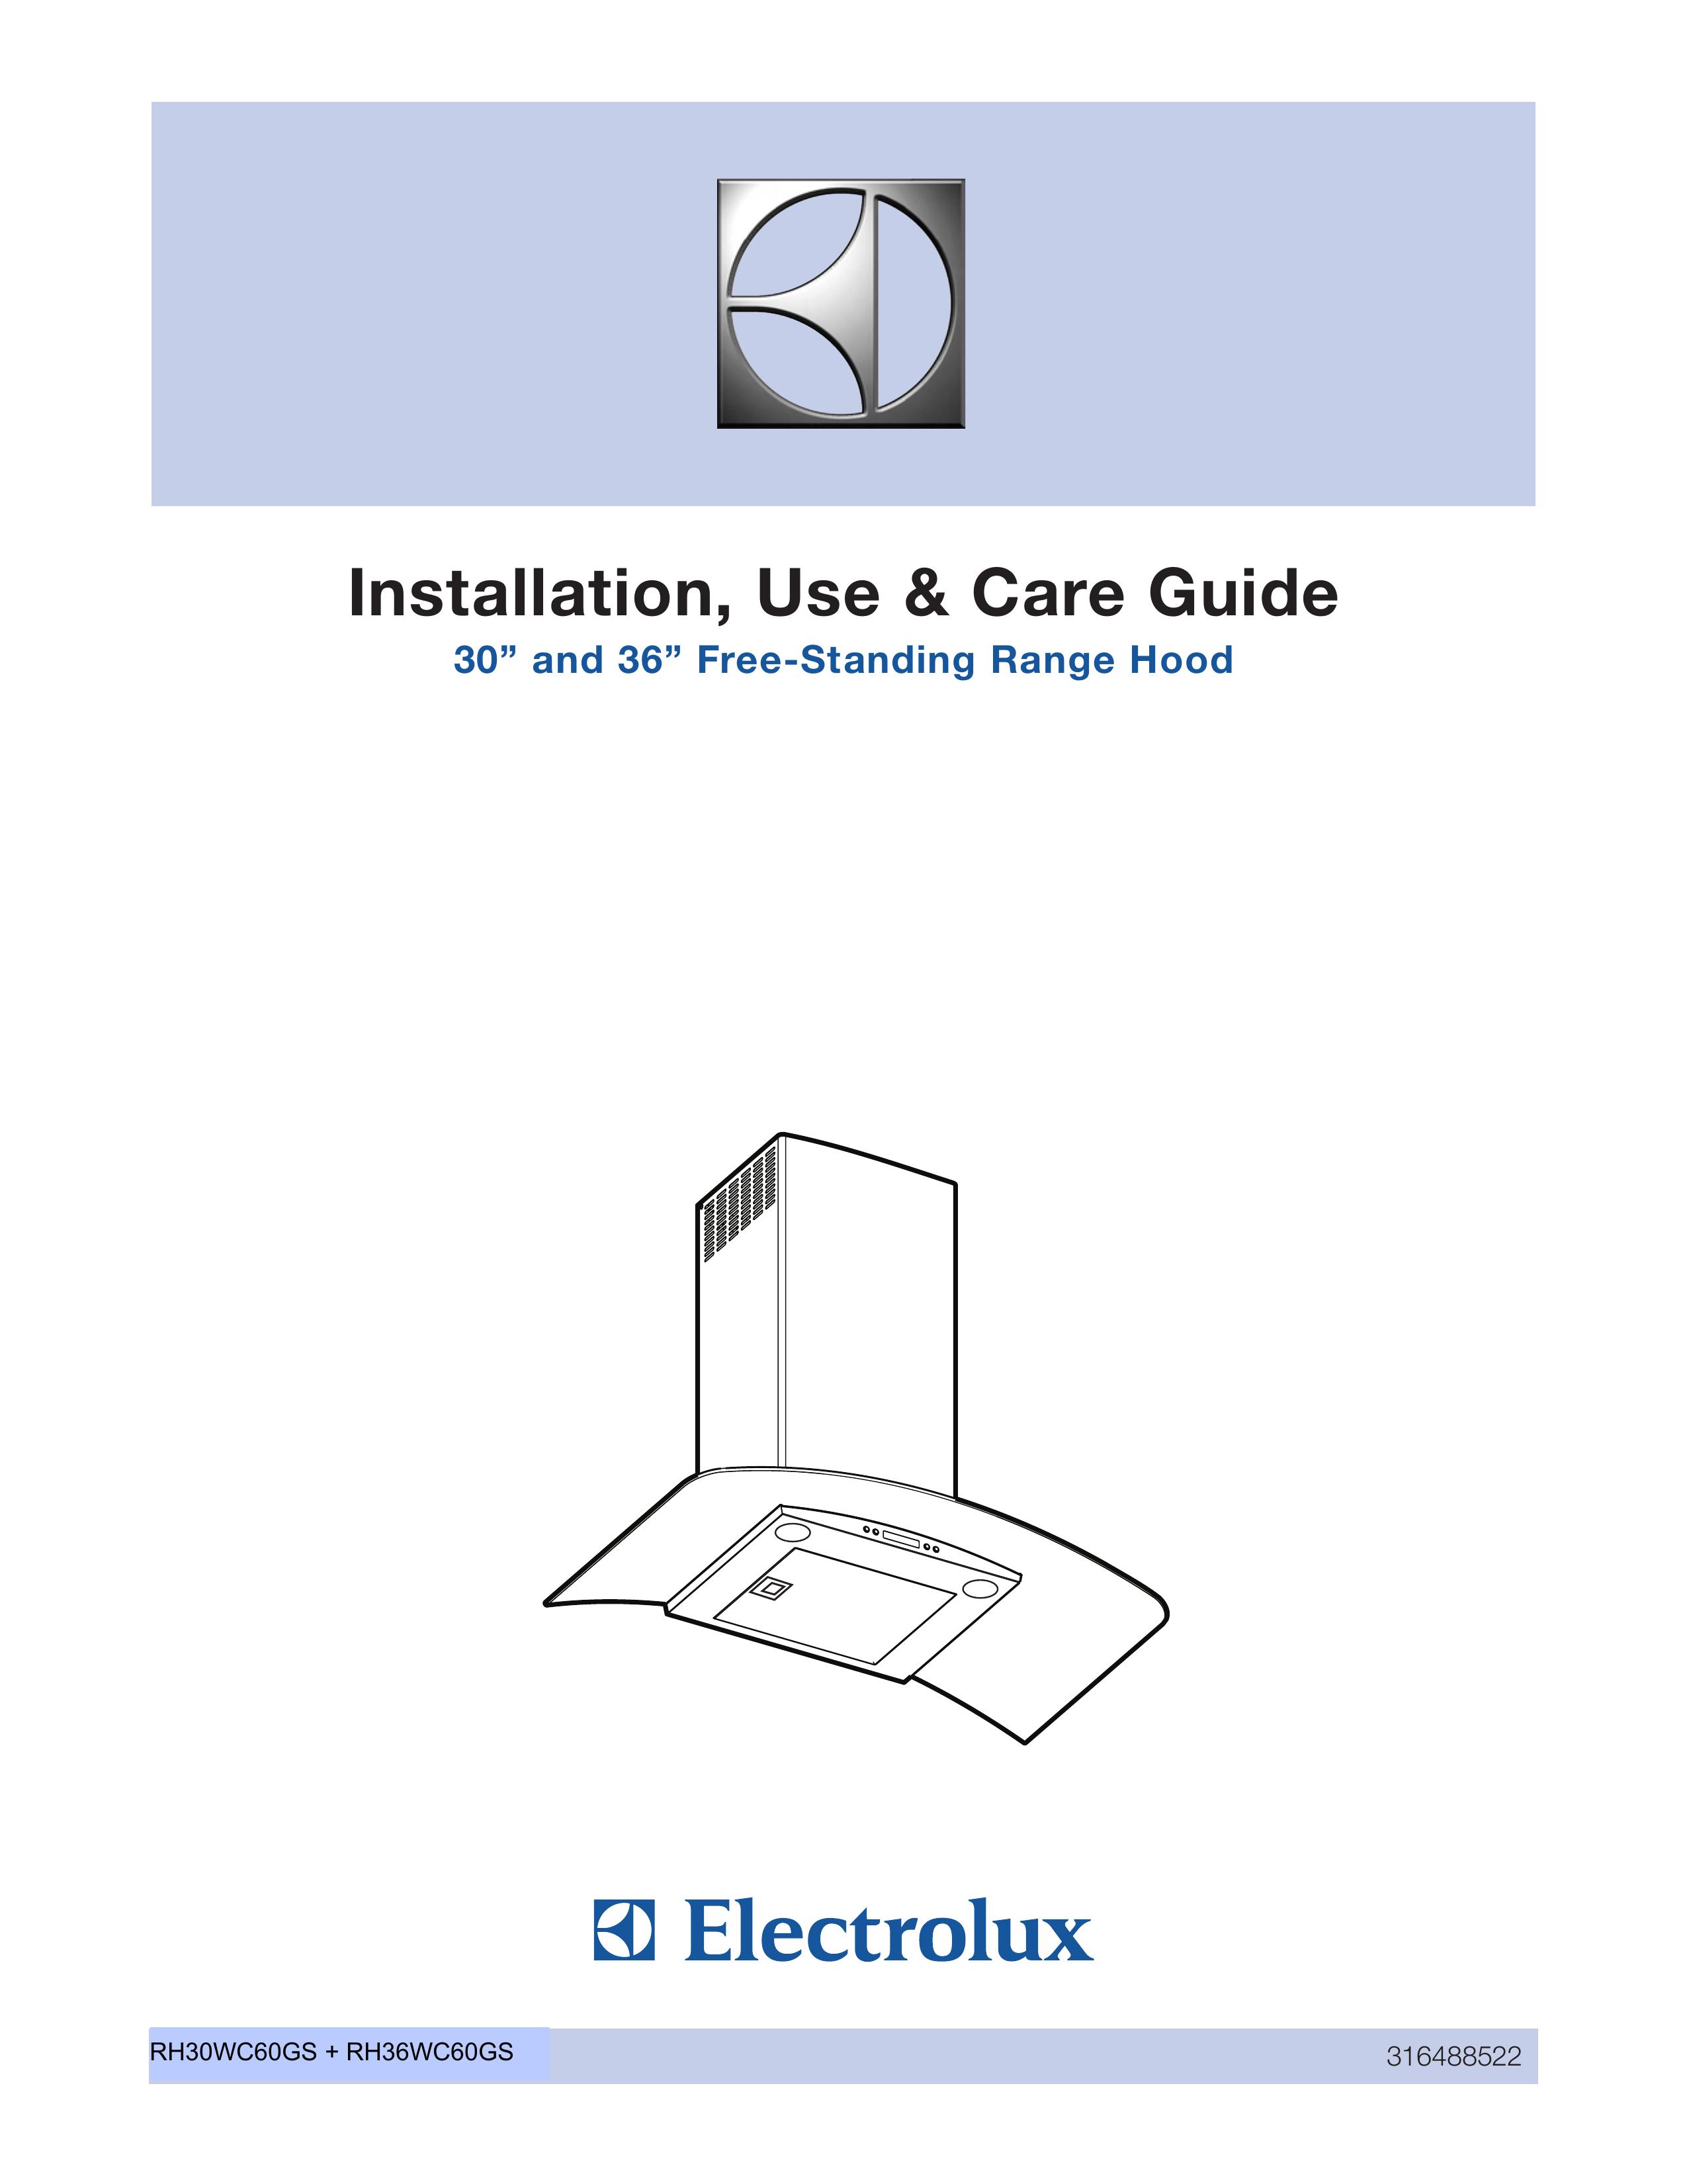 Frigidaire RH36WC60GS Ventilation Hood User Manual